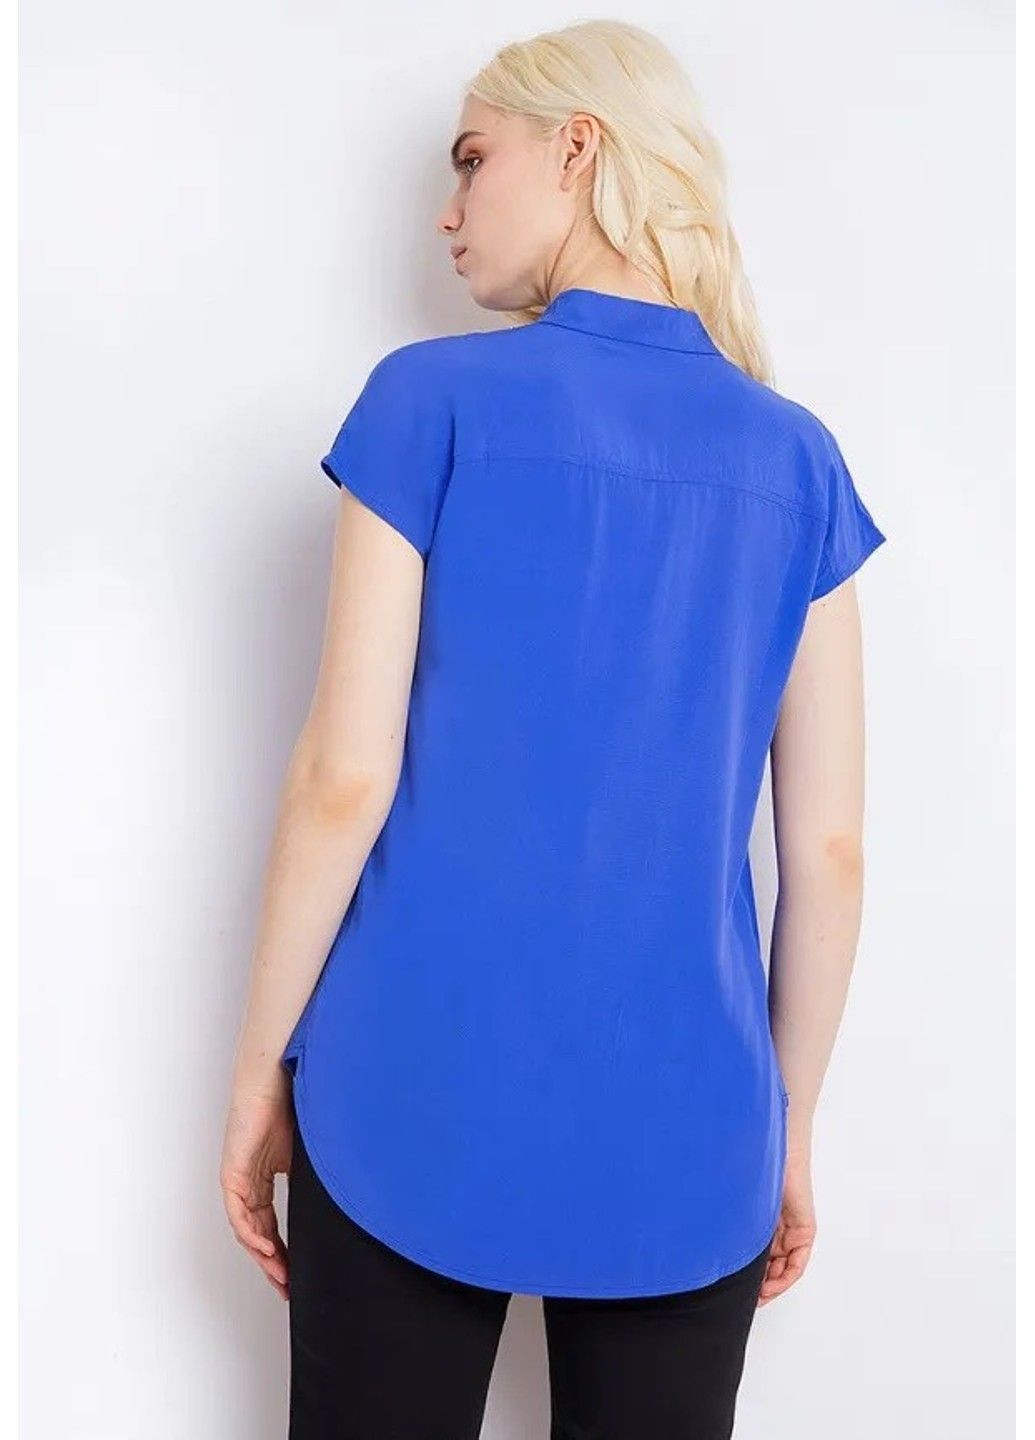 Синяя блузка s18-14069-815 Finn Flare